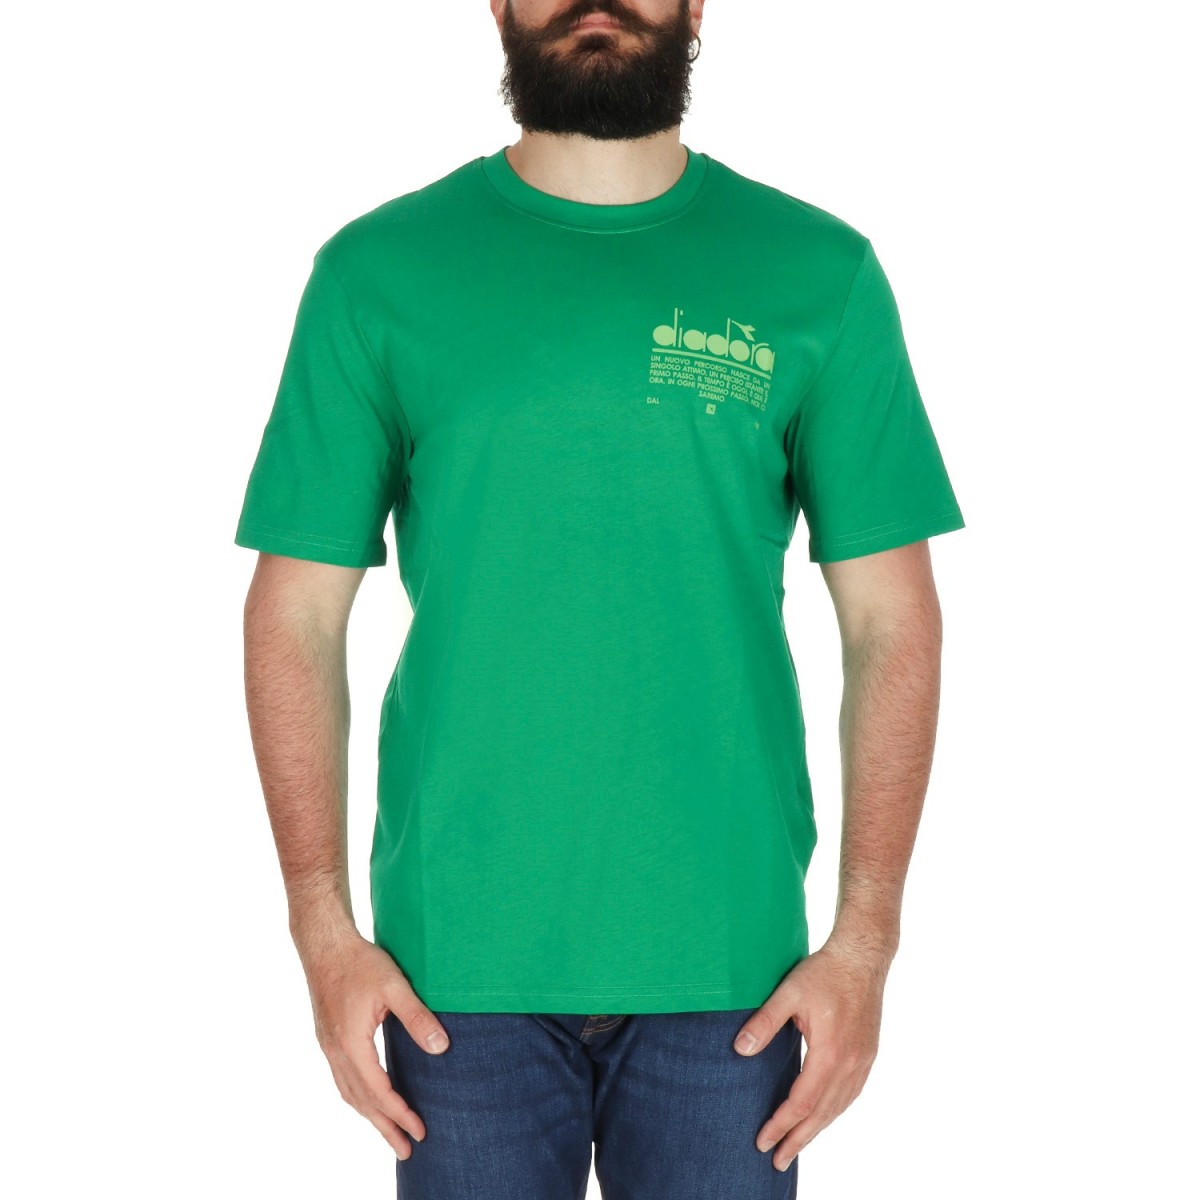 Diadora T-shirt Verde 502.178208